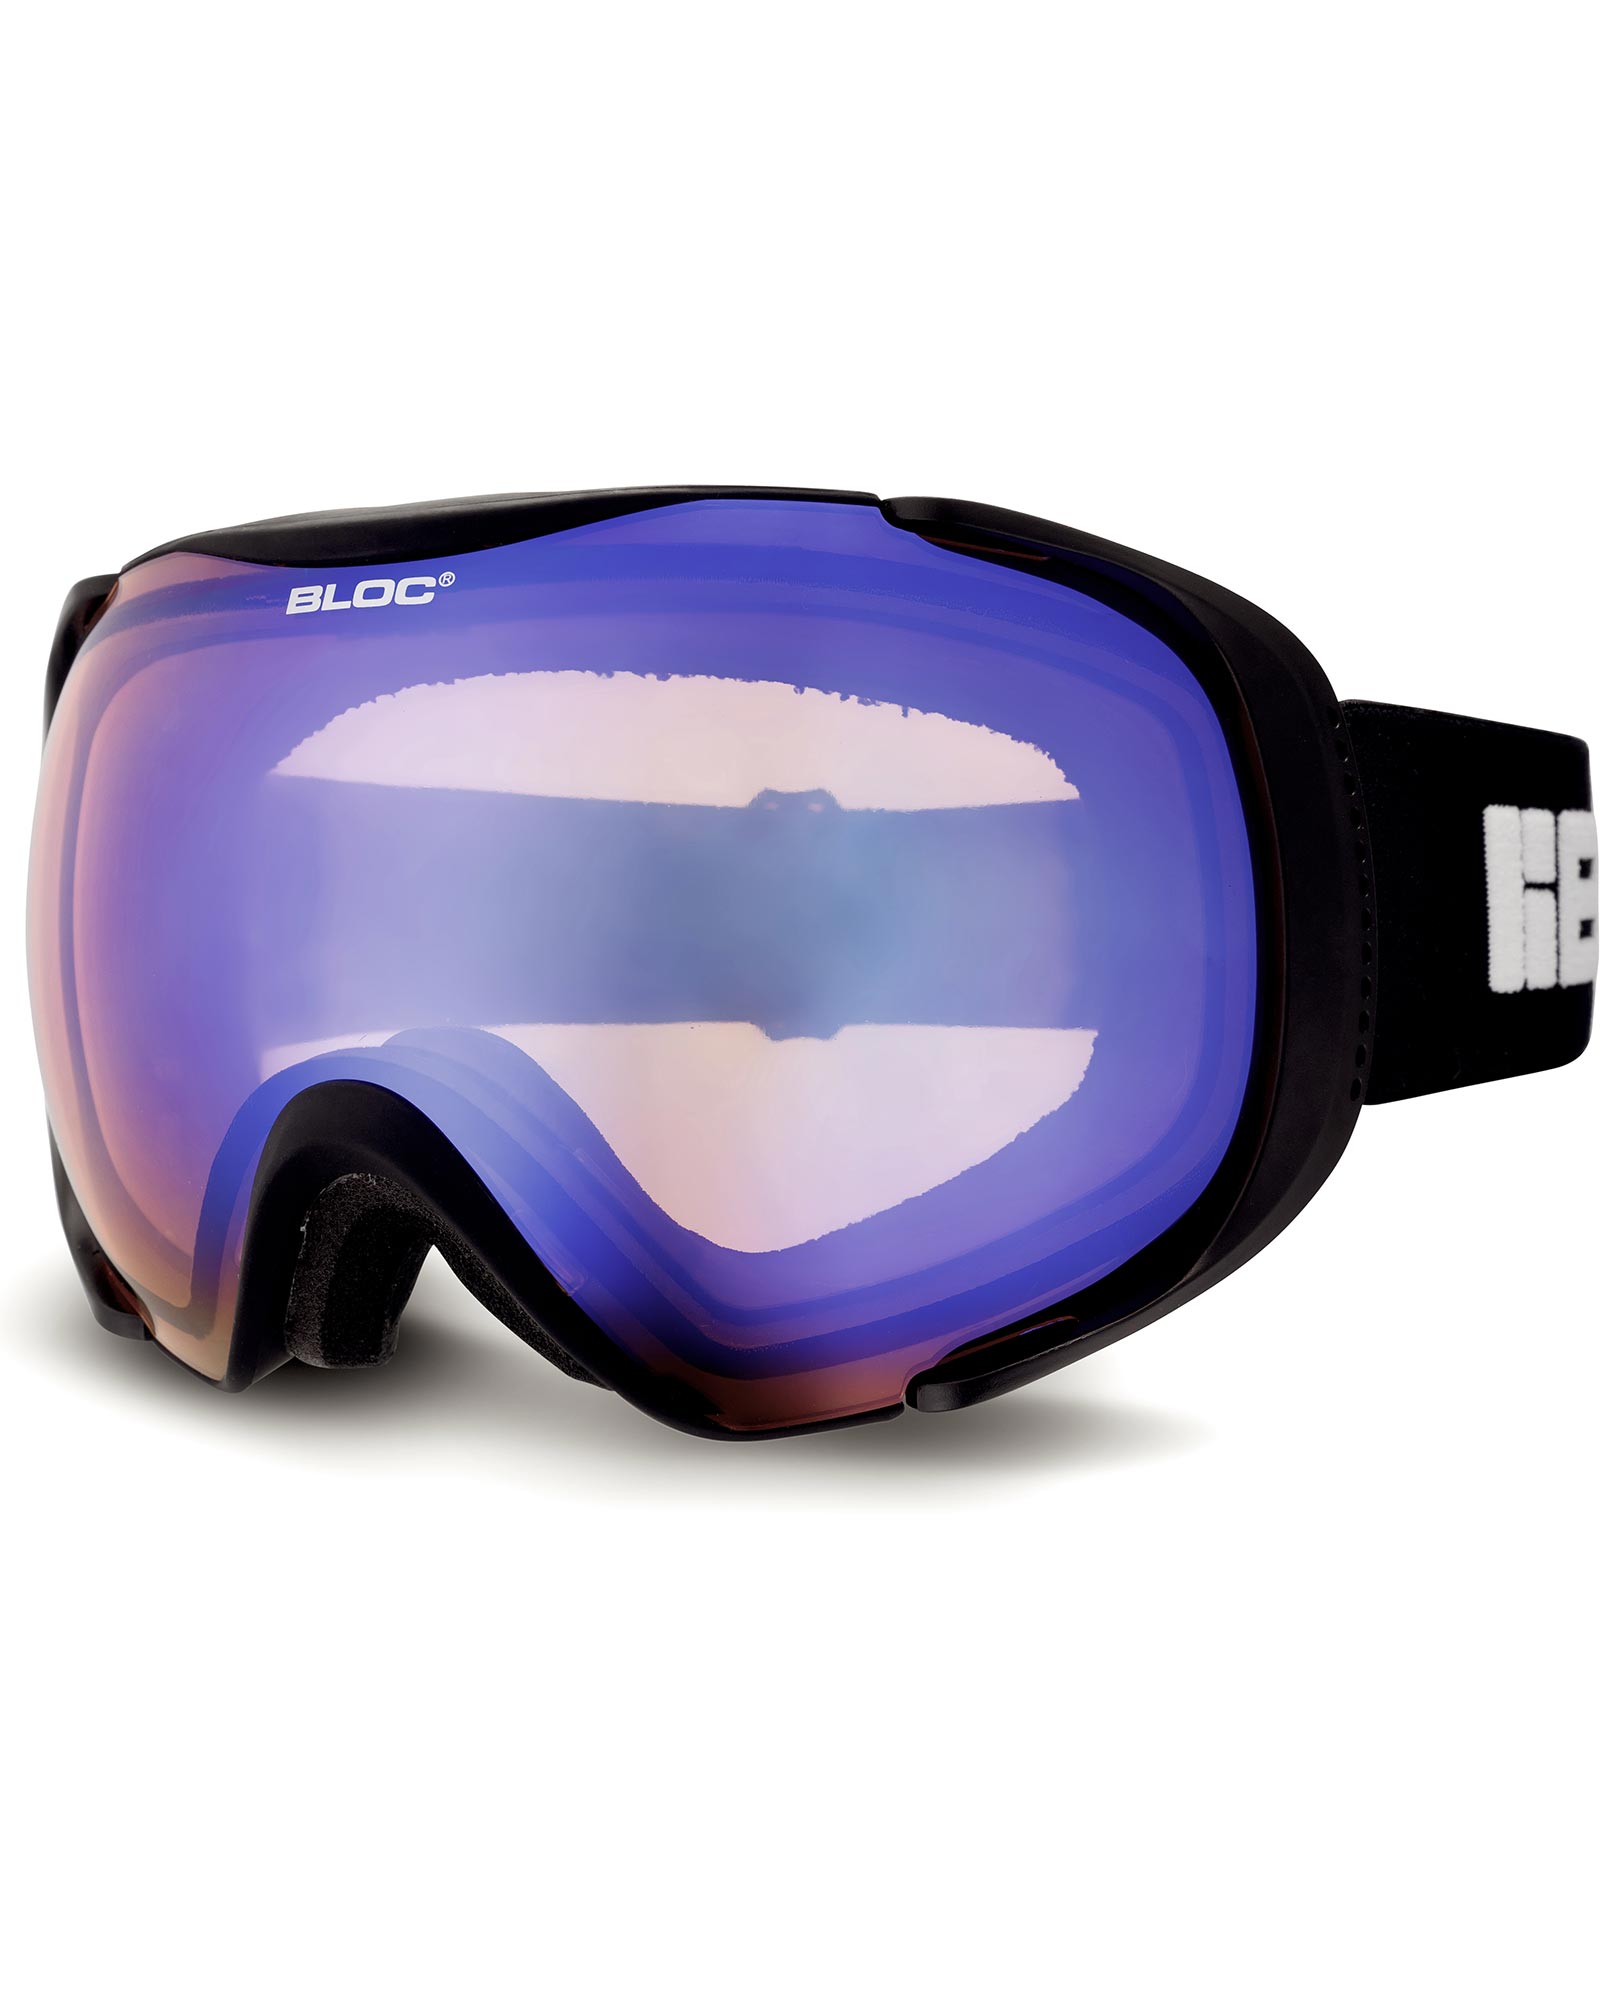 Bloc Mask Otg Matte Black / Brown Blue Mirror Goggles